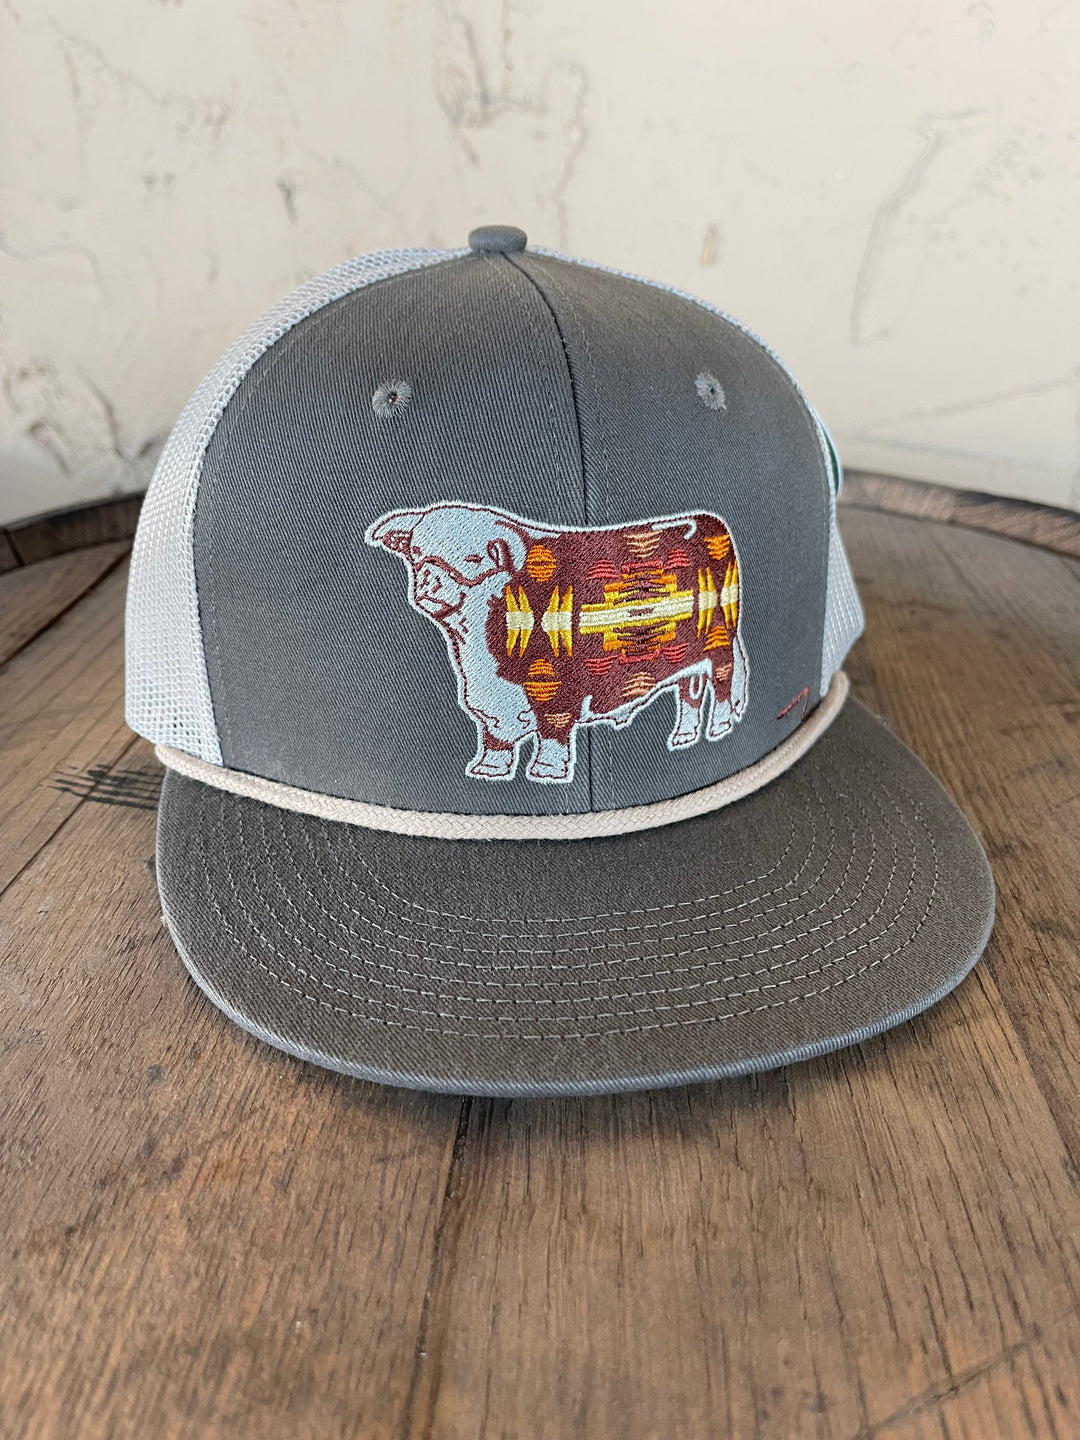 Lazy J Ranch Wear Olive & Tan 4" Apache Hereford Bull Cap